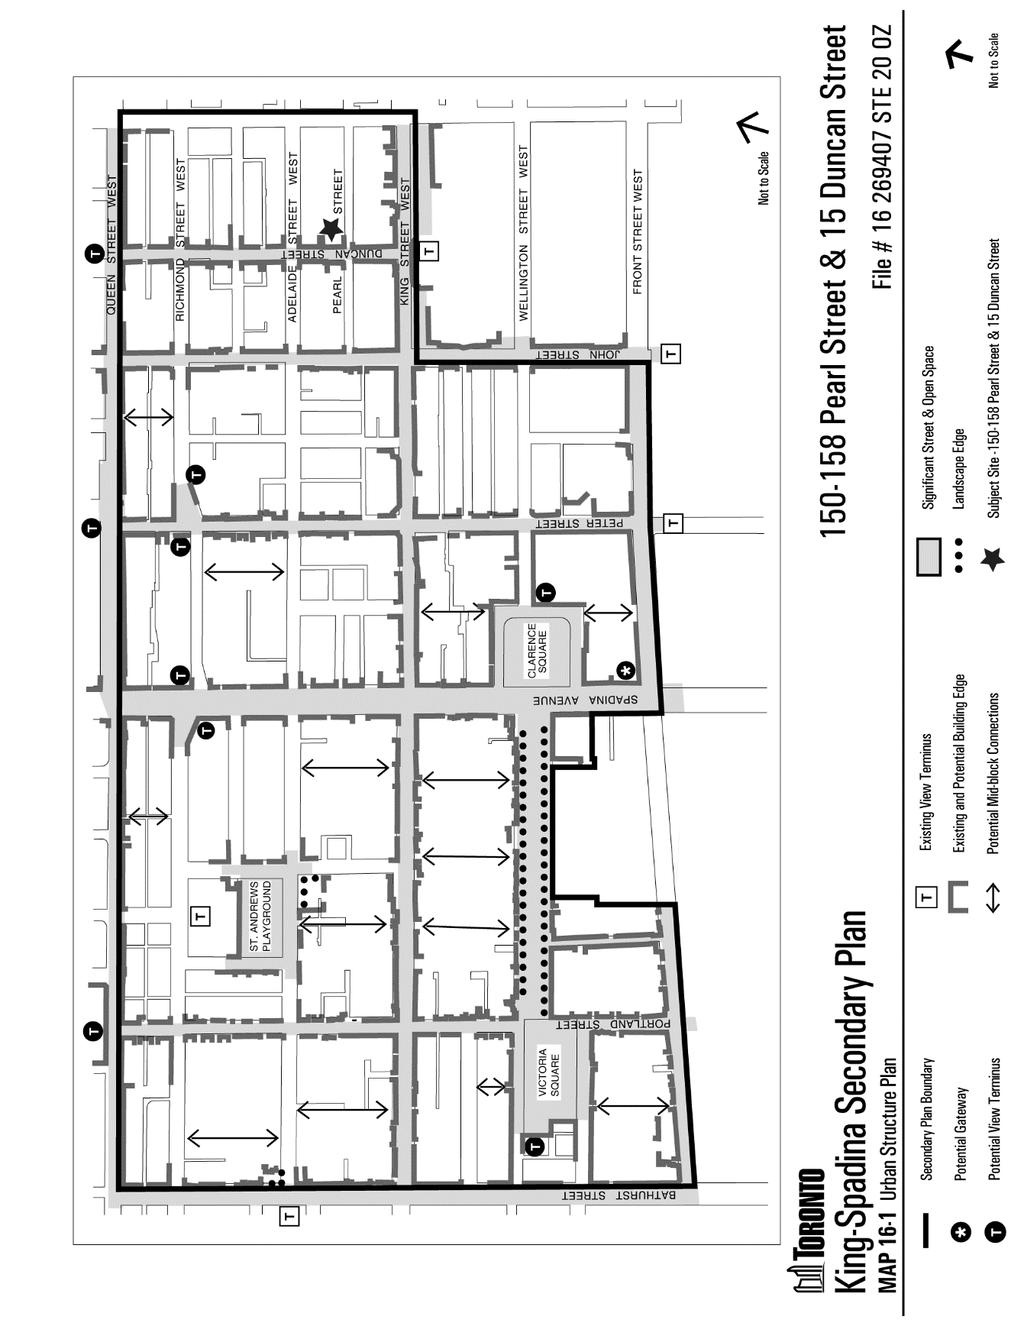 Attachment 7: King-Spadina Secondary Plan Urban Structure Plan Staff report